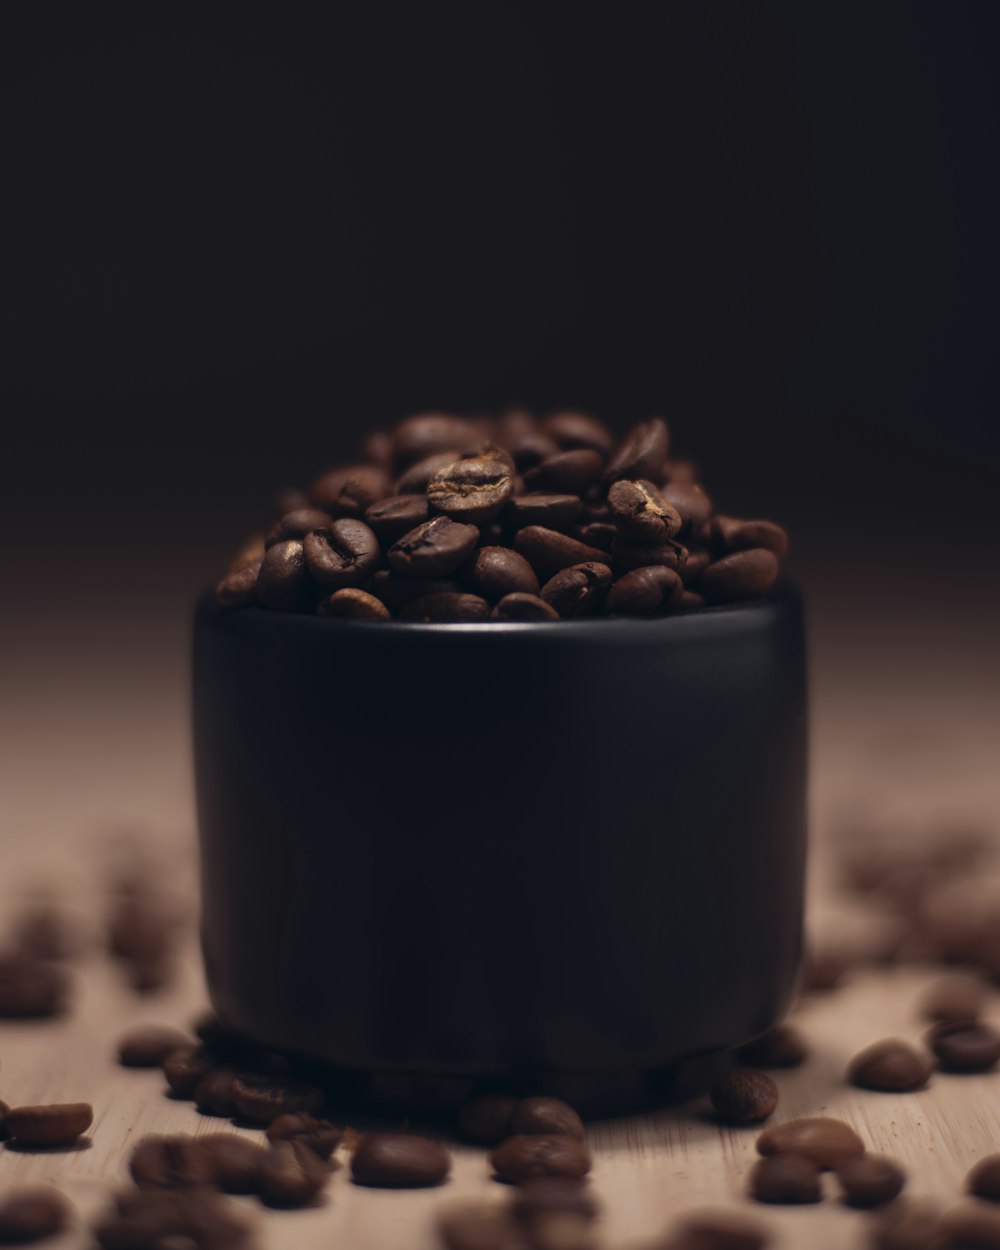 brown coffee beans in black ceramic mug